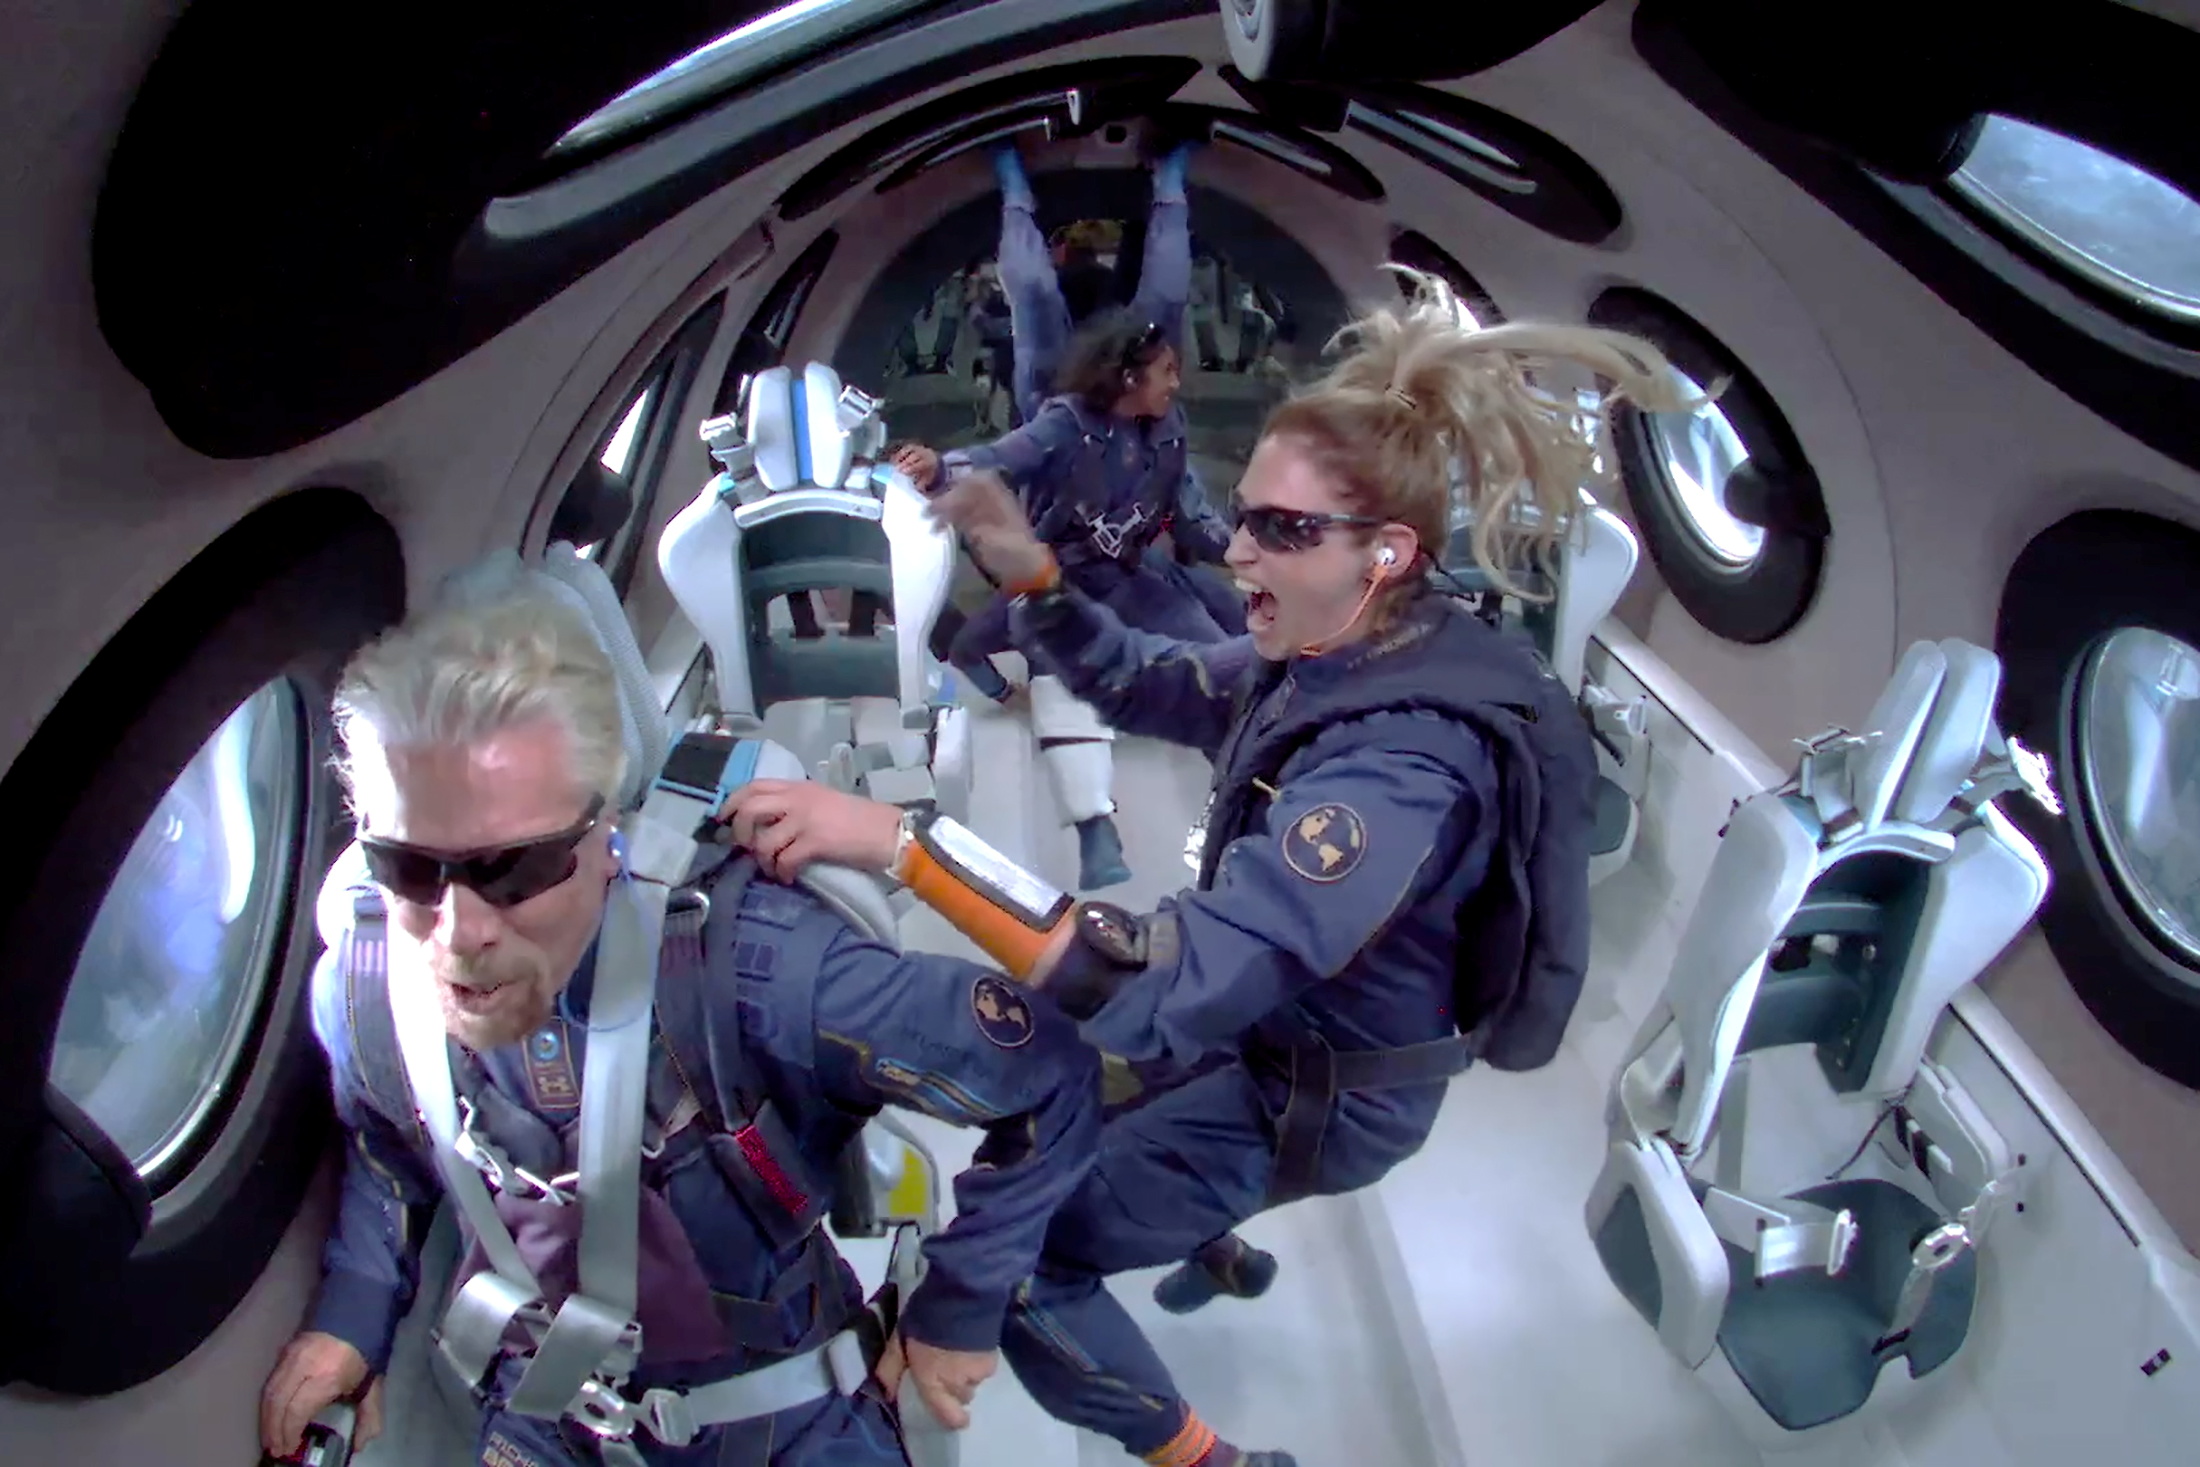 Billionaire Richard Branson speaks as crew members float in zero gravity above Spaceport America